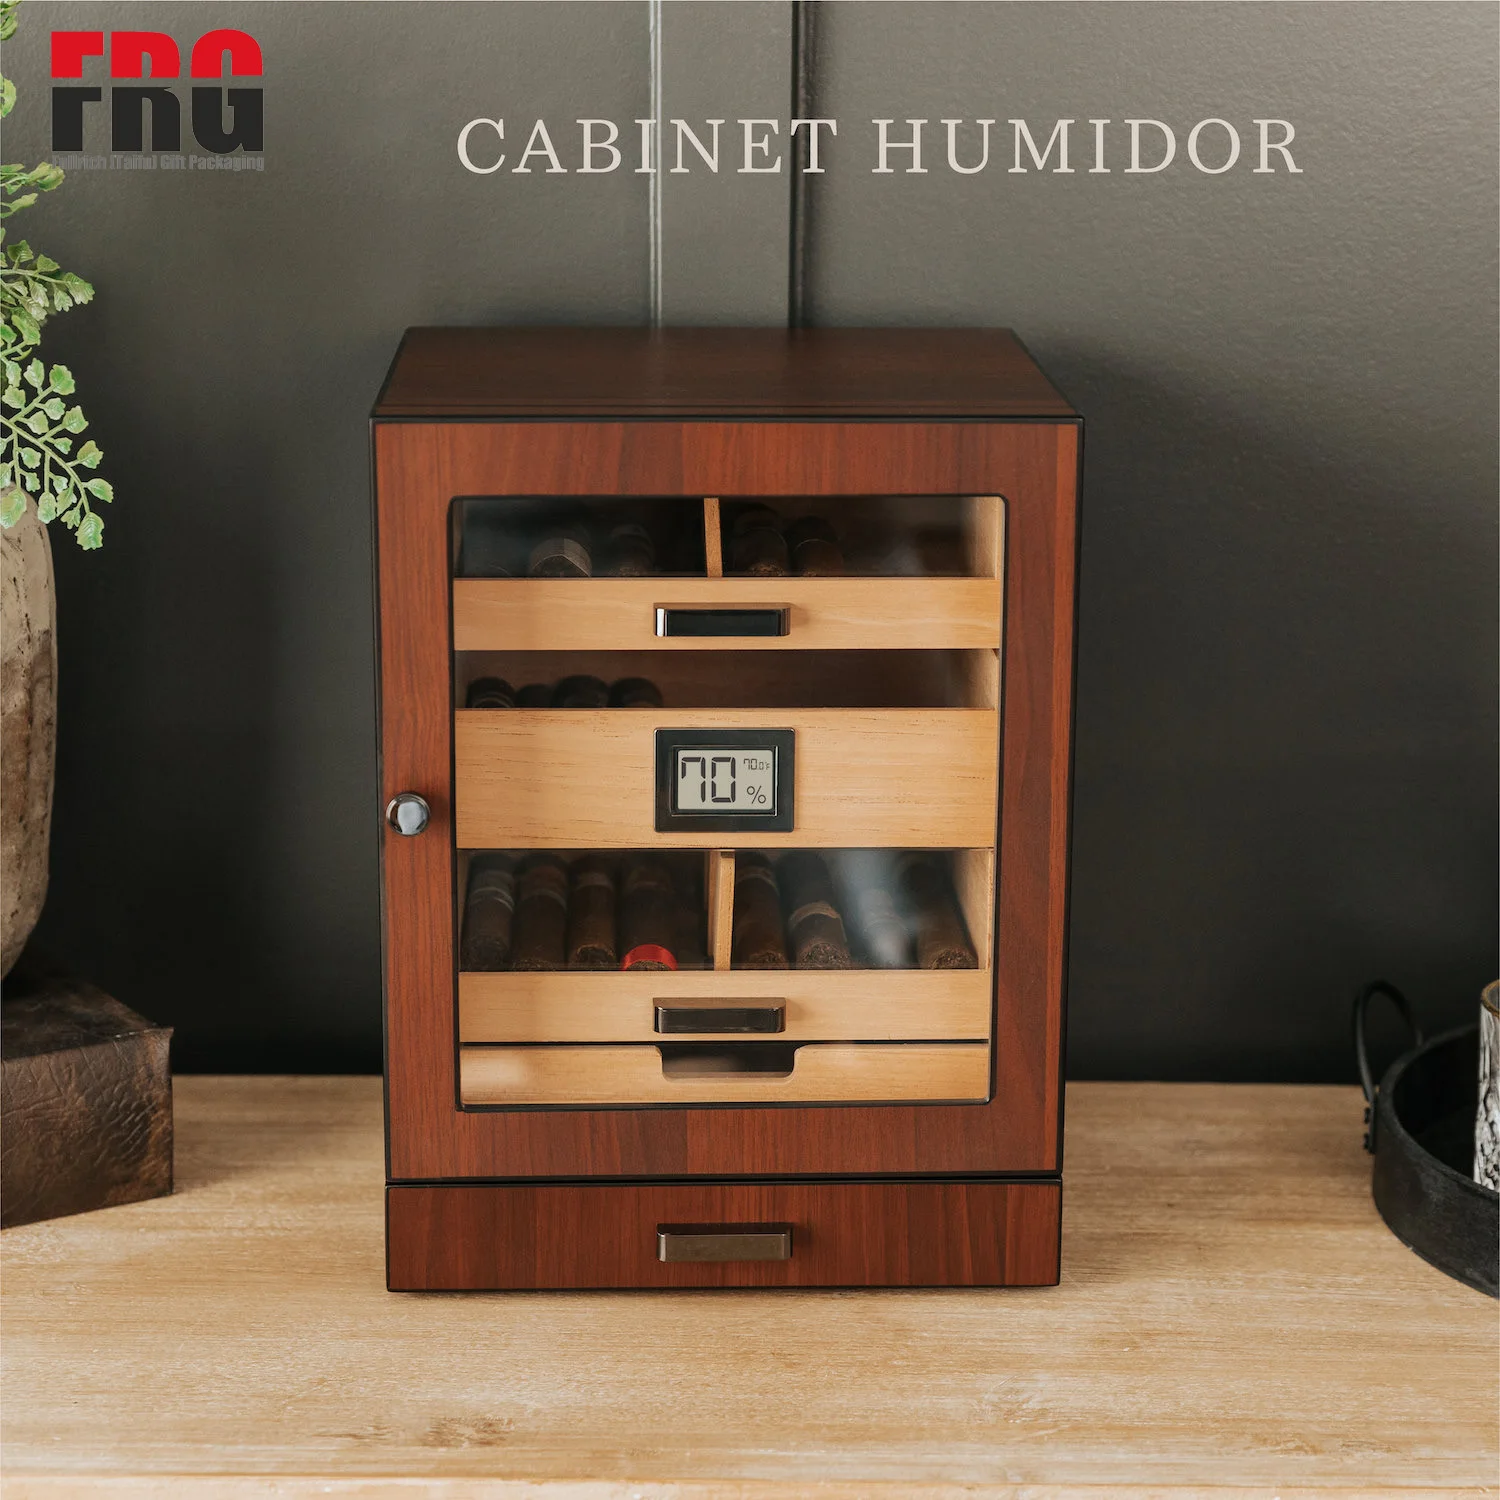 Customize Humidor Cabinet, Rich Brown Walnut Grain Large Size 80-100 Cigars Digital Hygrometer with Spanish Cedar